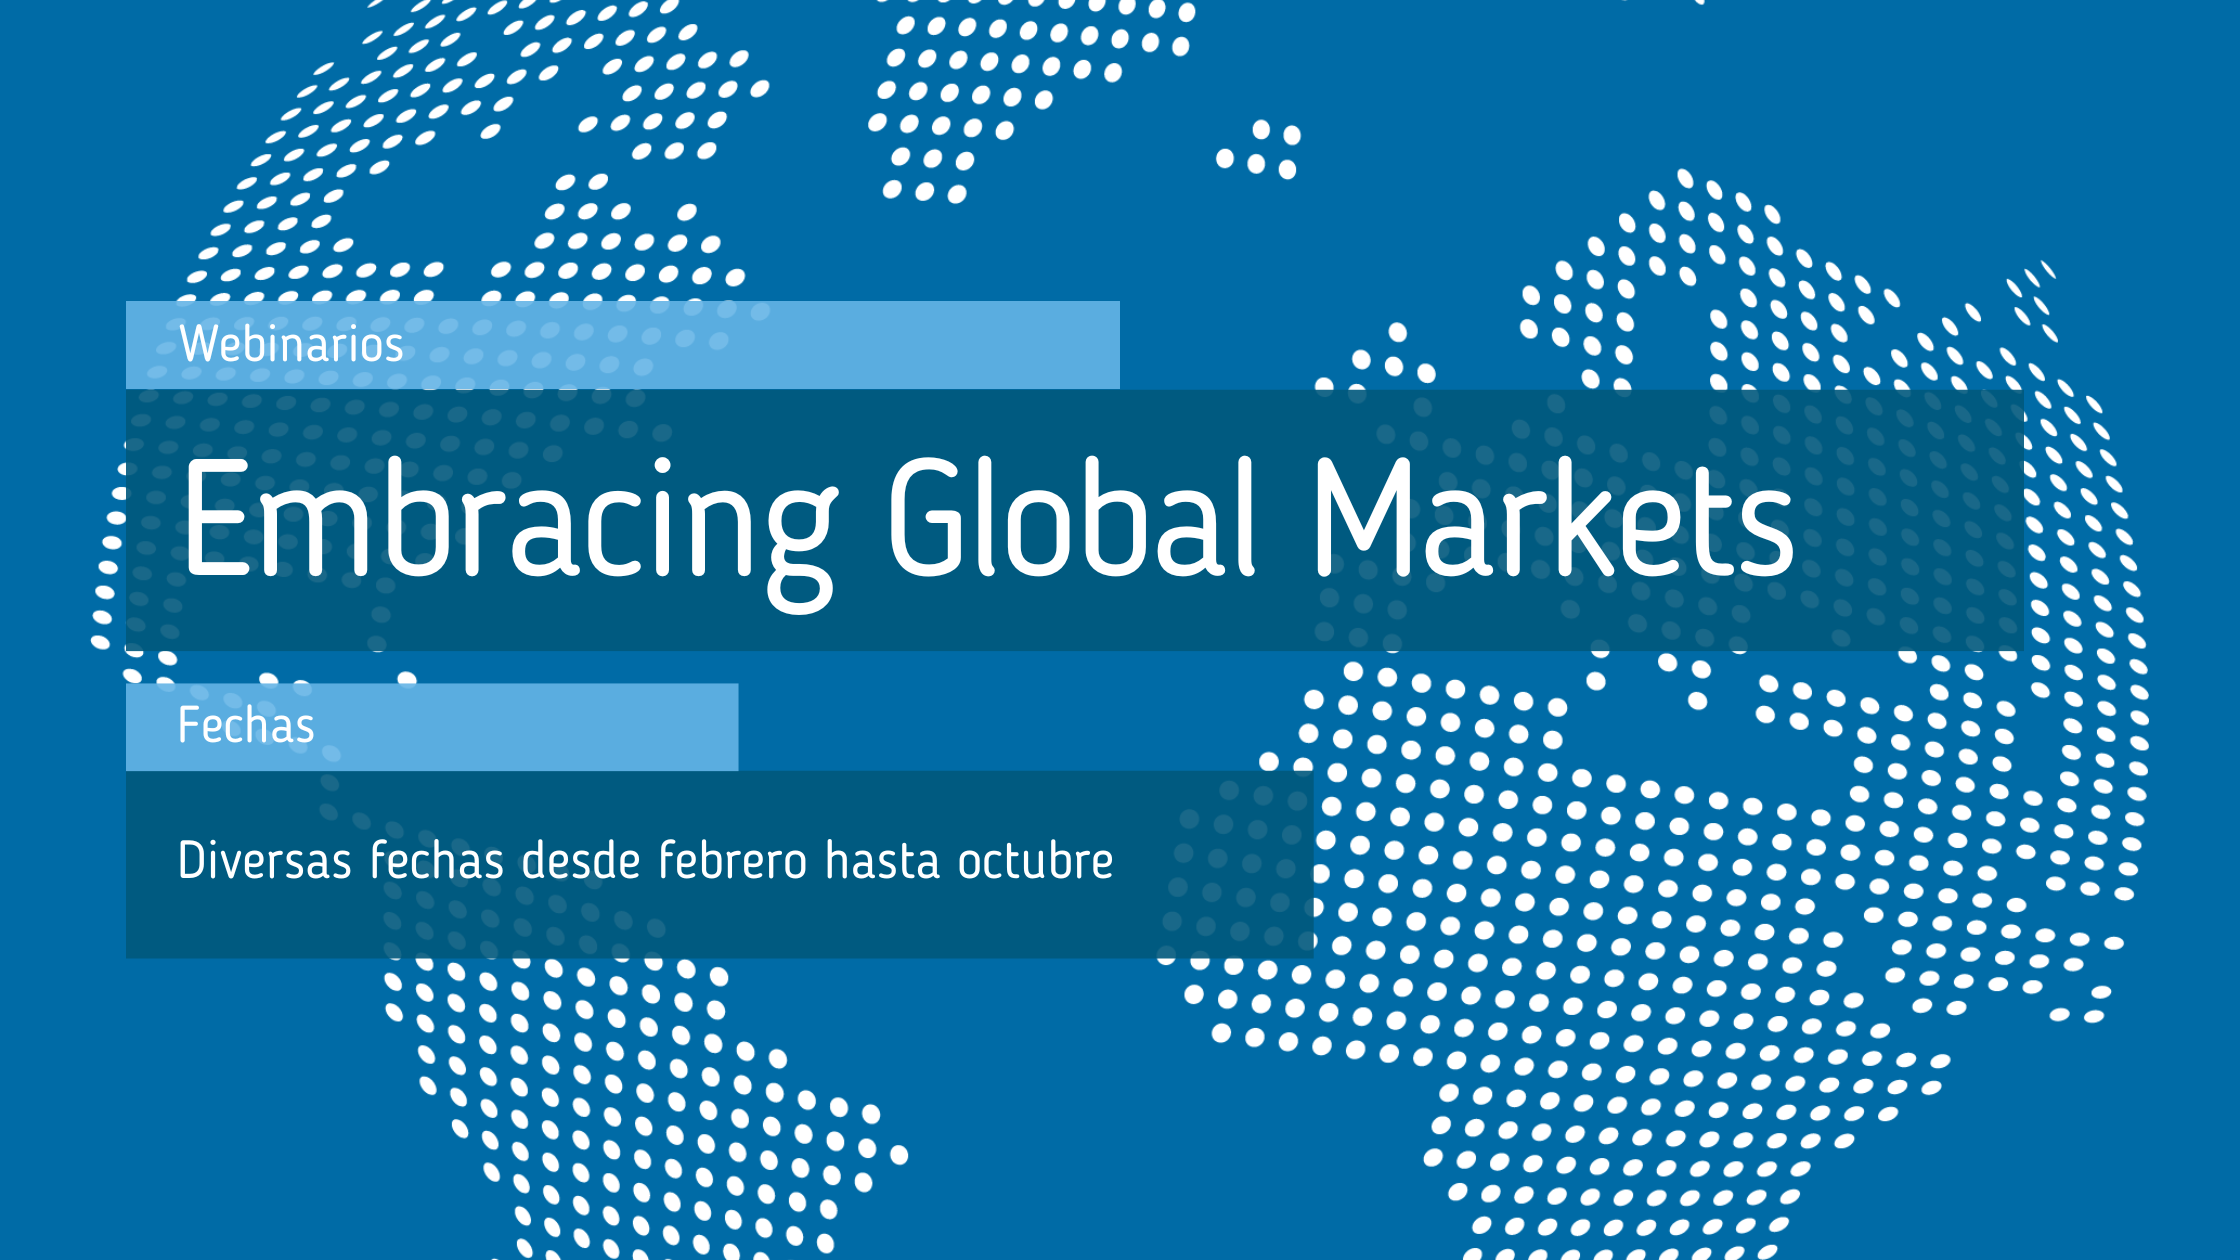 Embracing_Global_Markets_Webinarios_de_la_Enterprise_Europe_Network